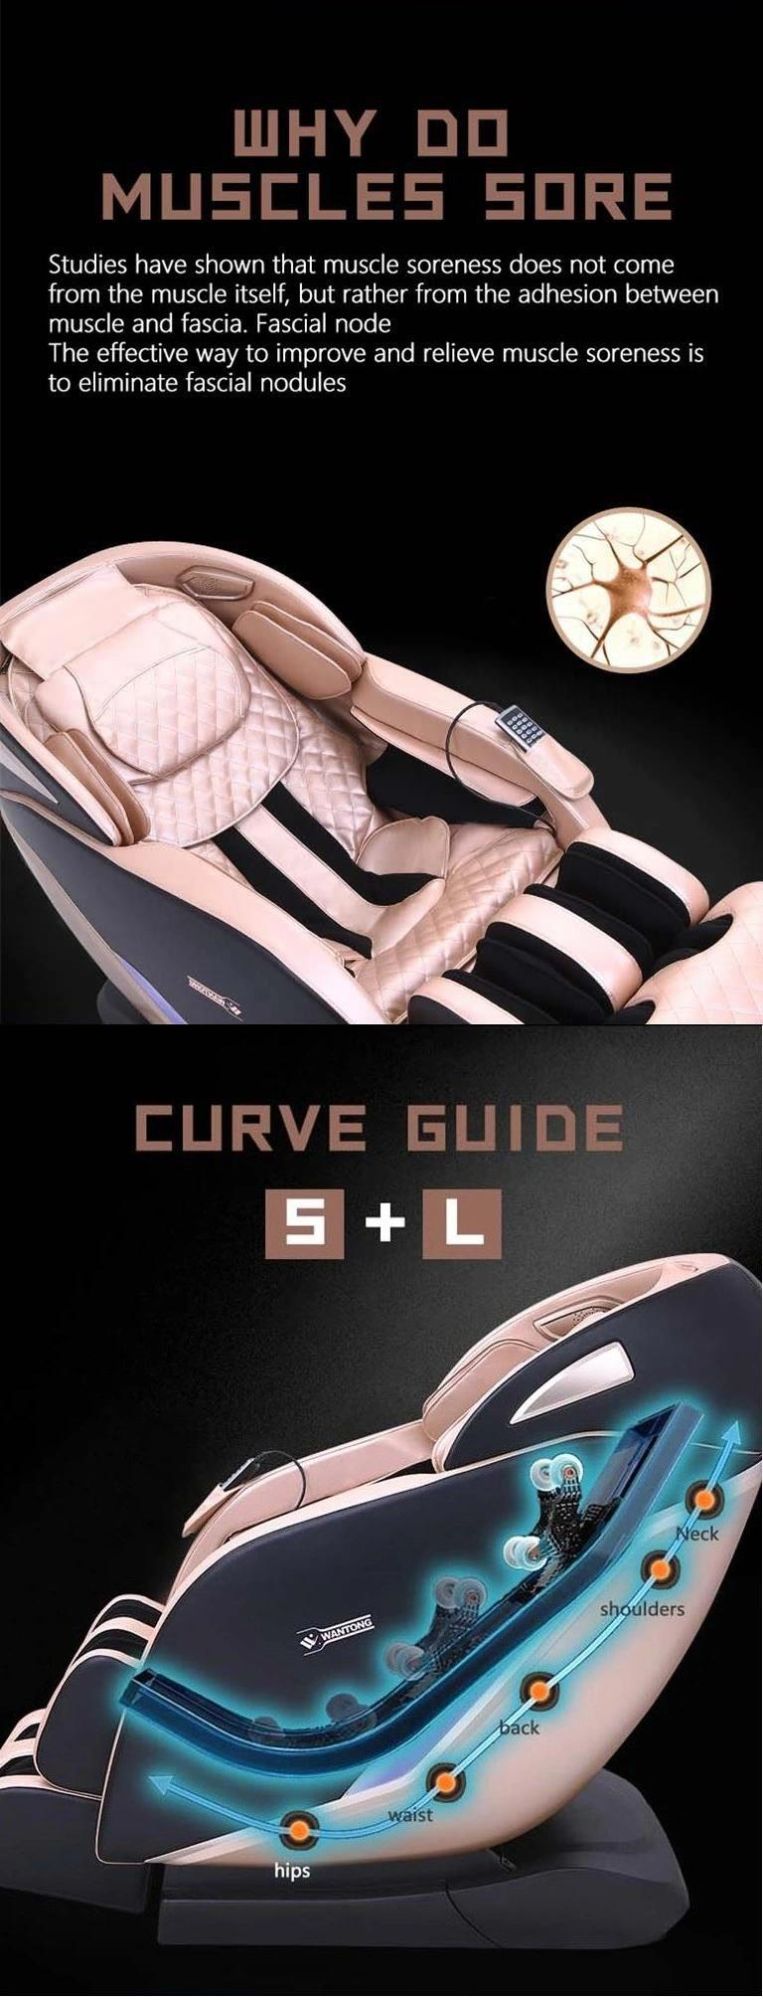 2021 Cheap Price Ergonomic 4D Electric Zero Gravity SL Track Full Body Foot Head Office Massage Chair